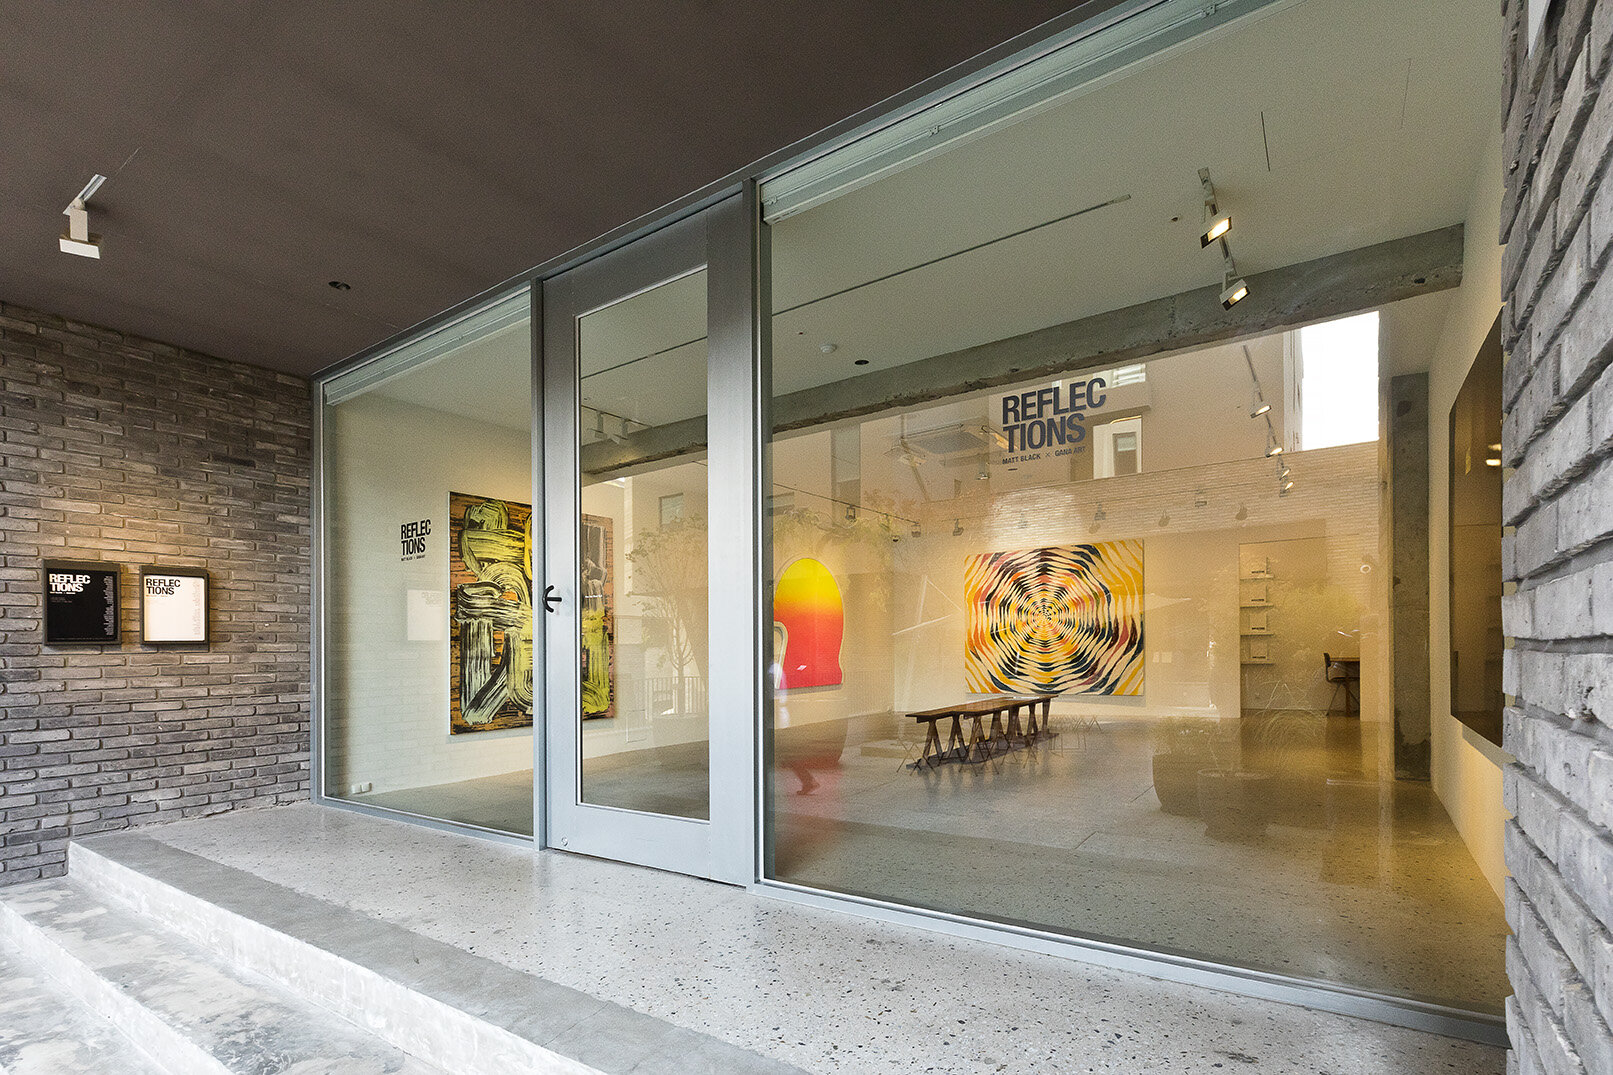  Reflections, 2019. Installation view. Image courtesy of Gana Art Center and Matt Black Studio 